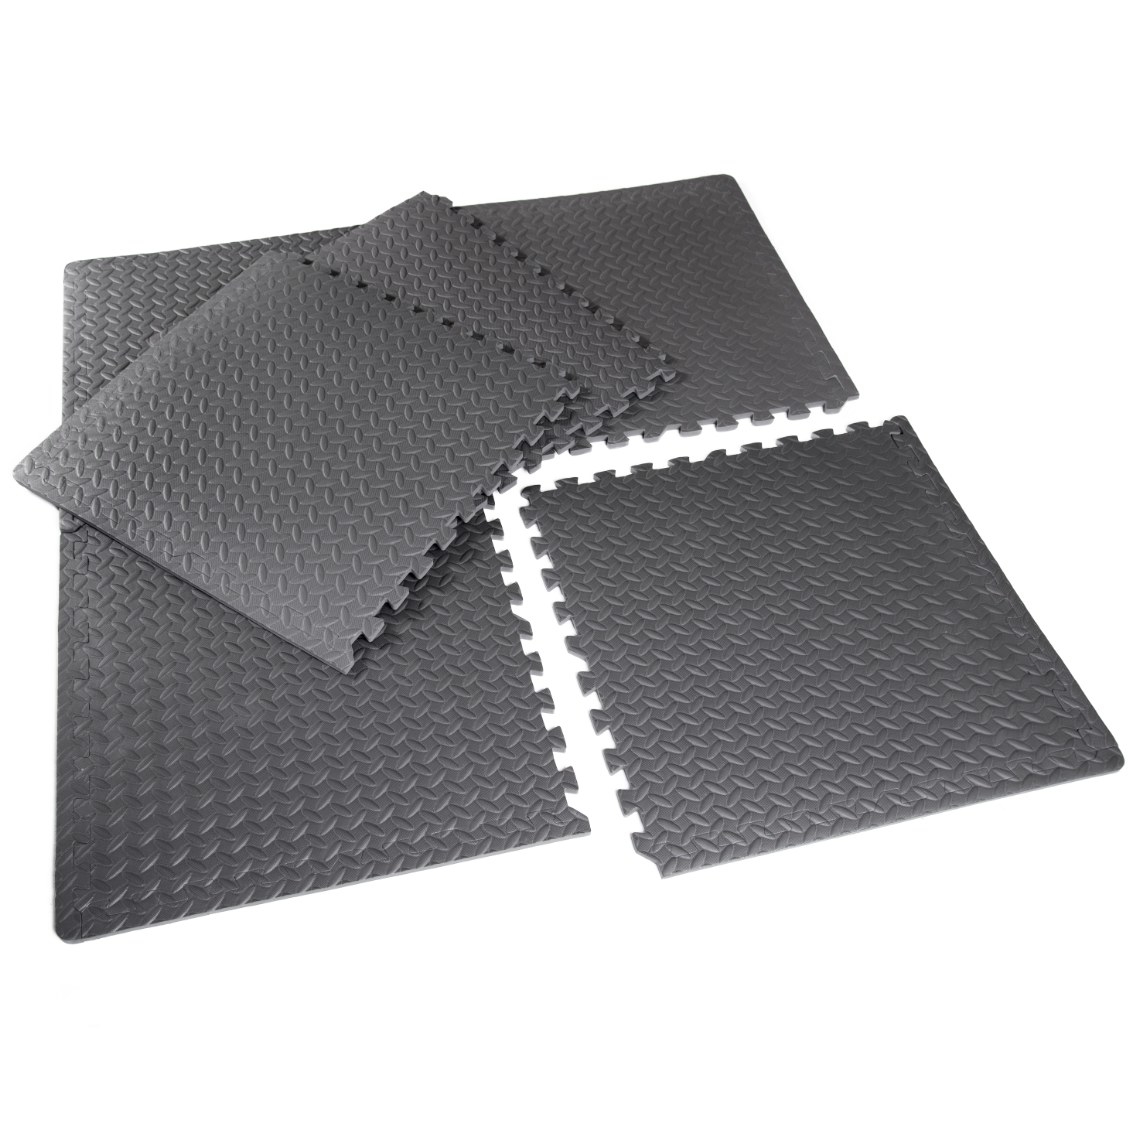 The six-piece interlocking puzzle mat